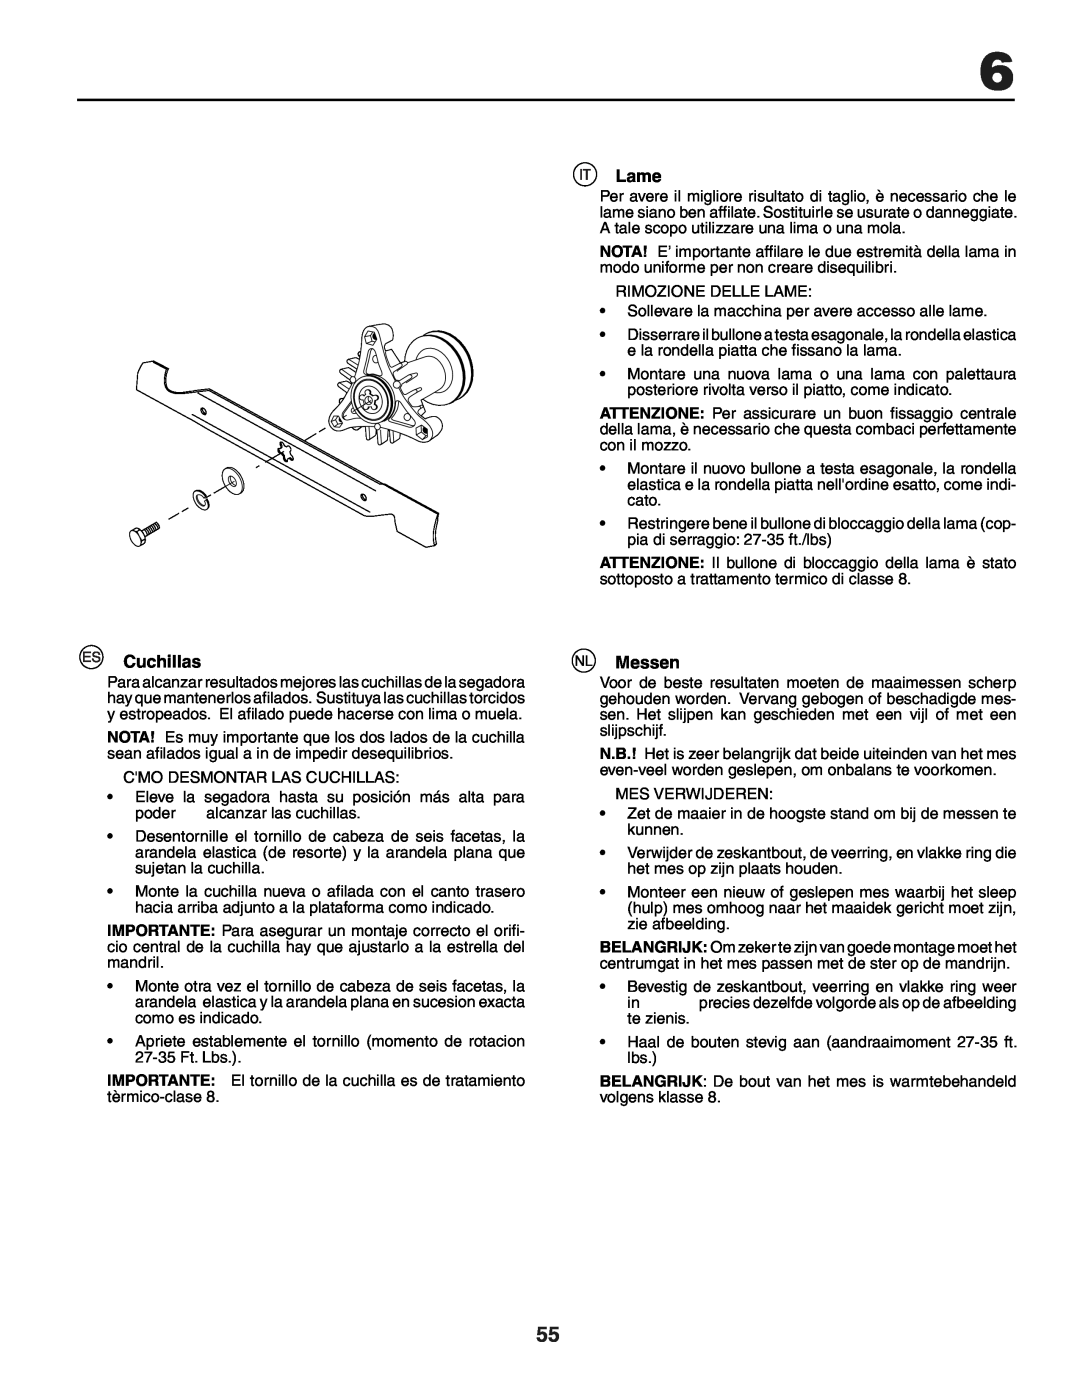 Husqvarna YTH150XP instruction manual Cuchillas, Lame, Messen 